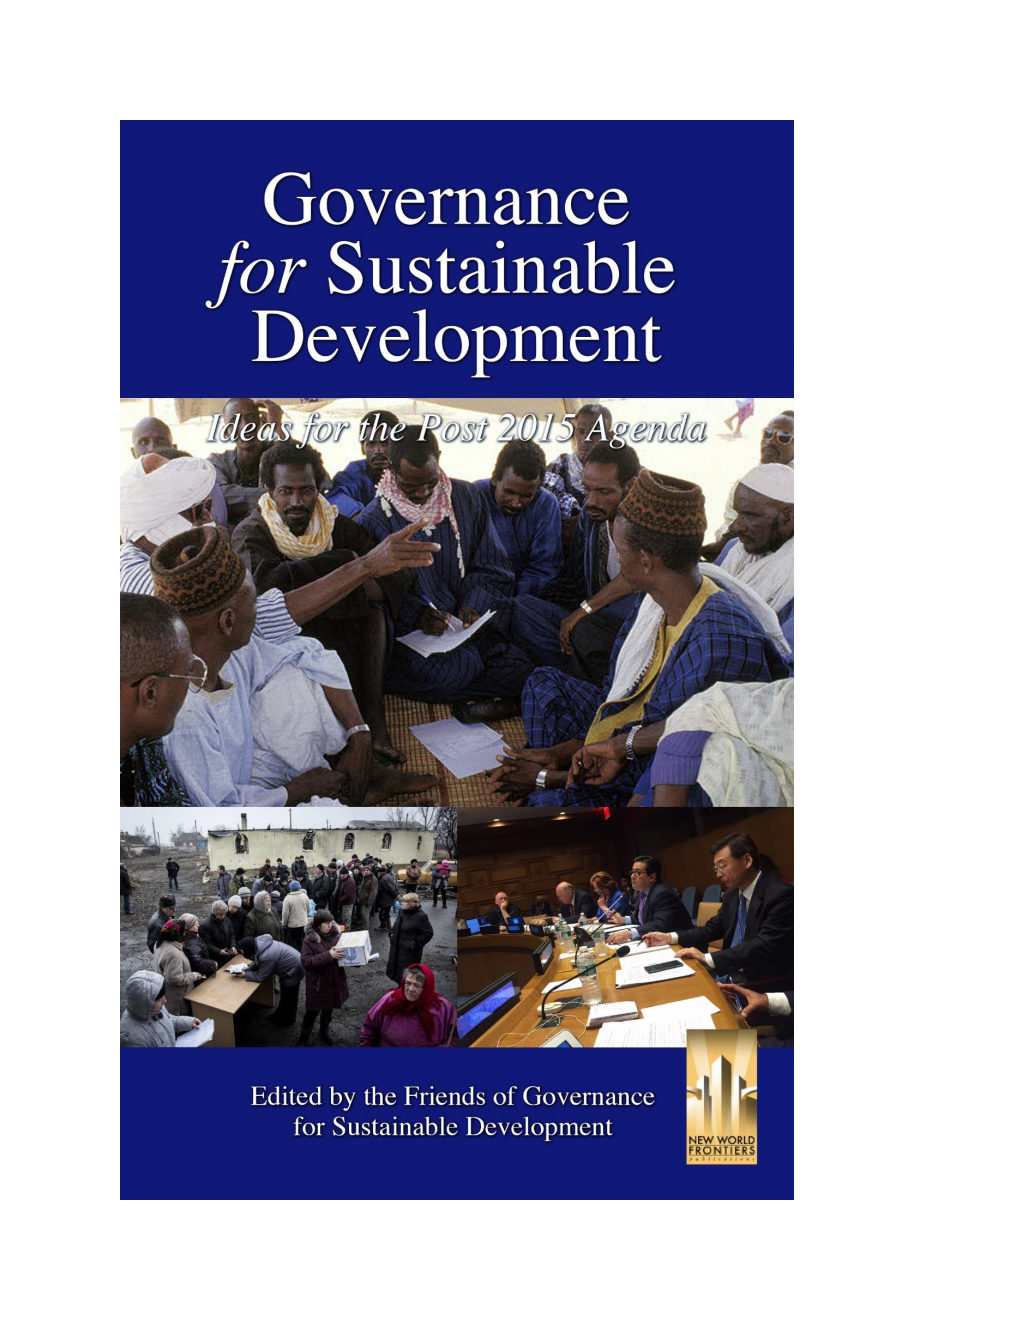 Governance for Sustainable Development Is Produced by the Friends of Governance for Sustainable Development